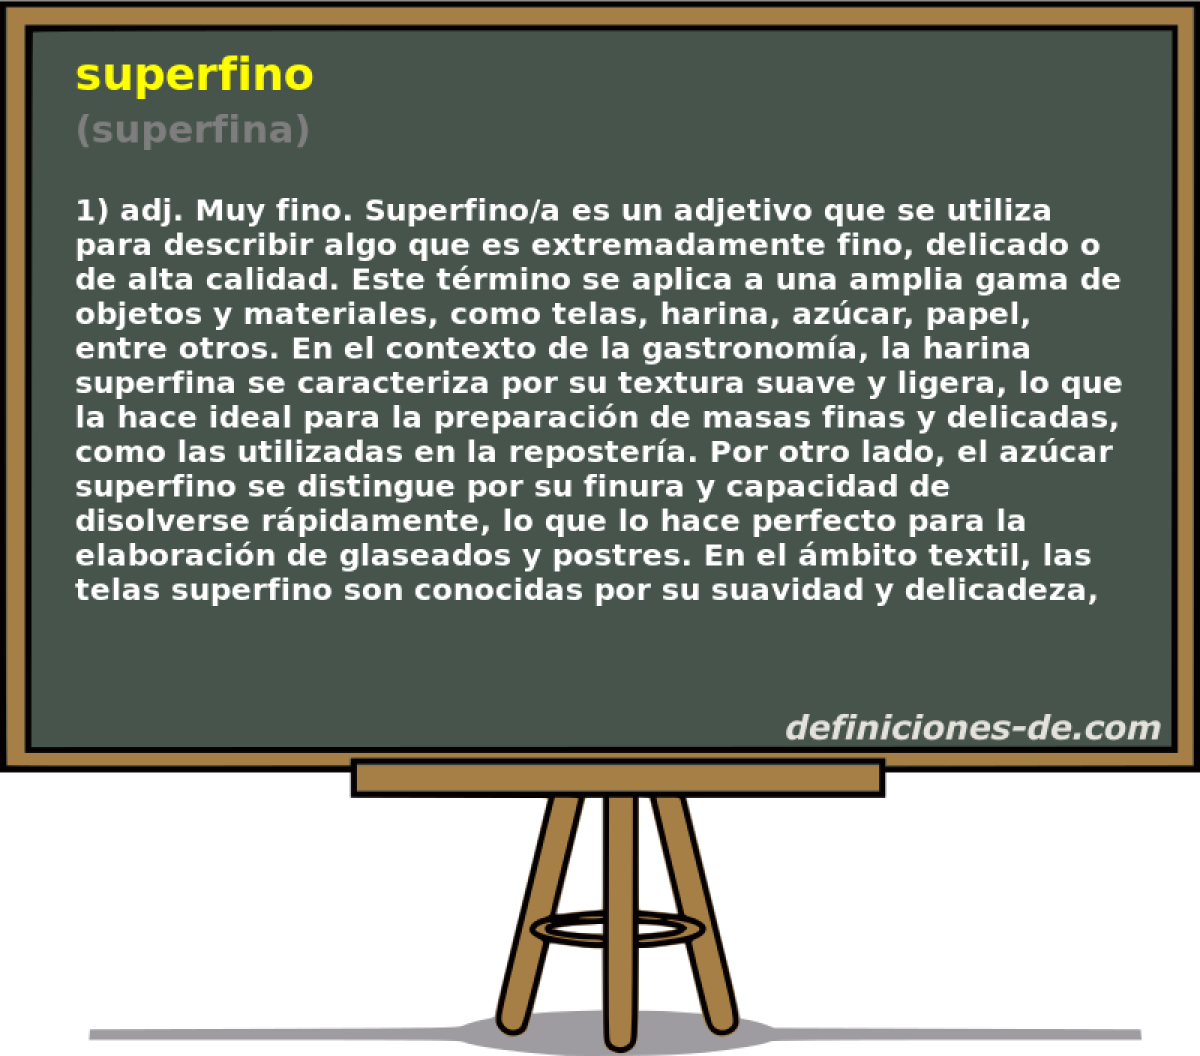 superfino (superfina)